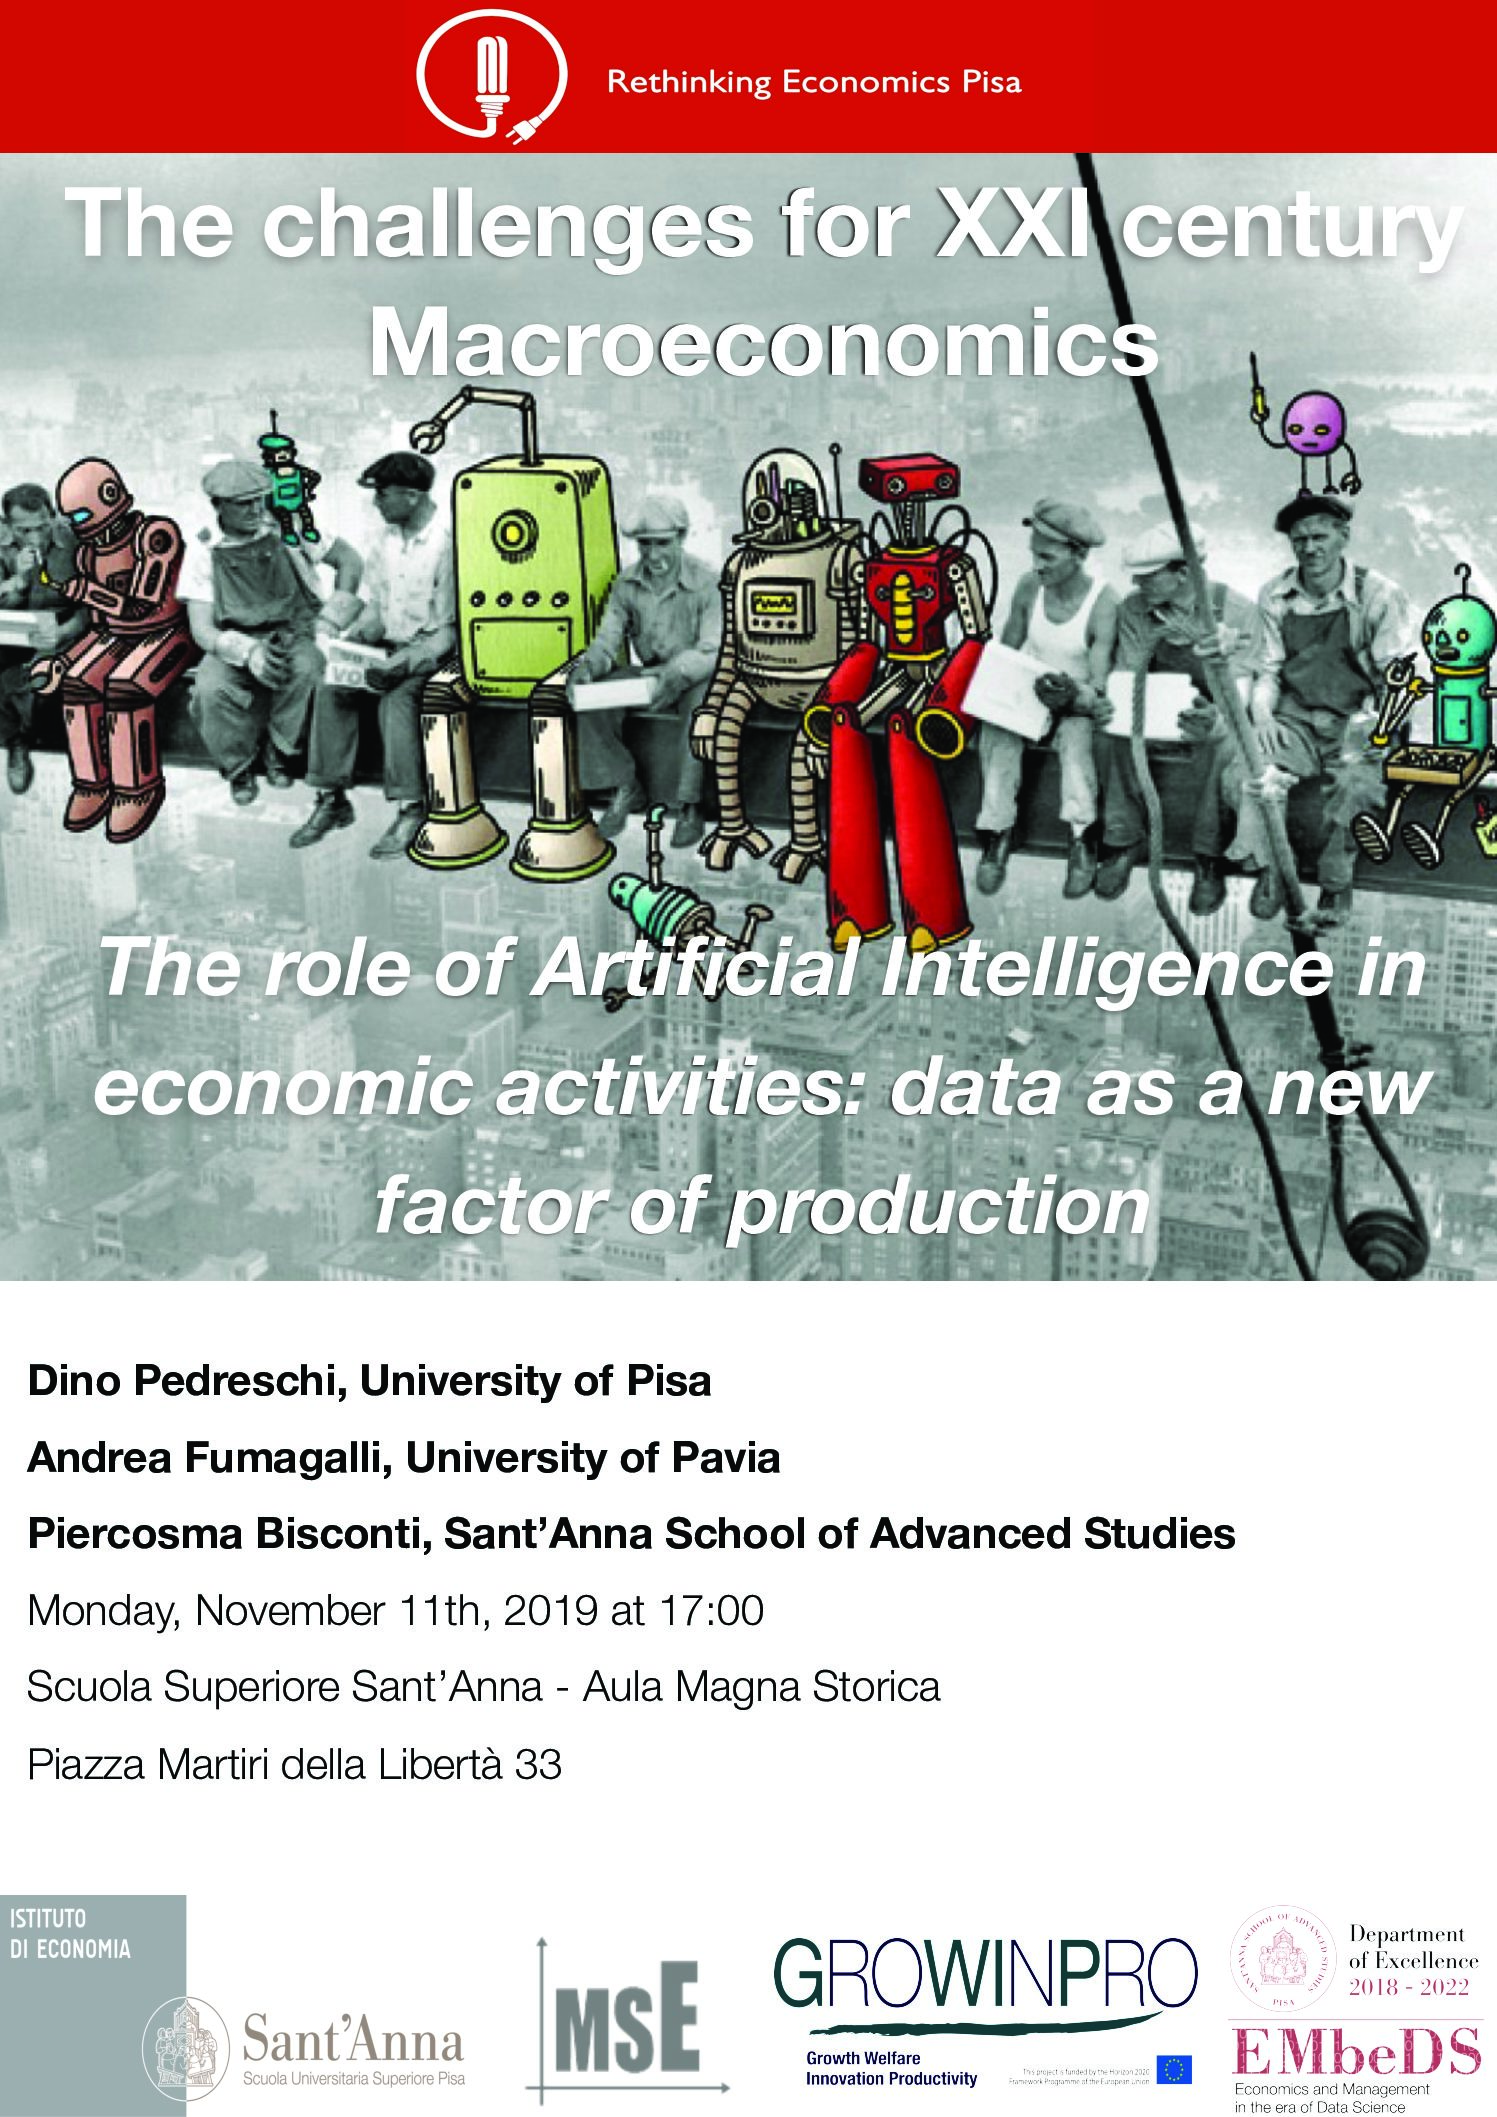 Cicle of Seminars “The challenges for XXI century Macroeconomics” 11st November 2019